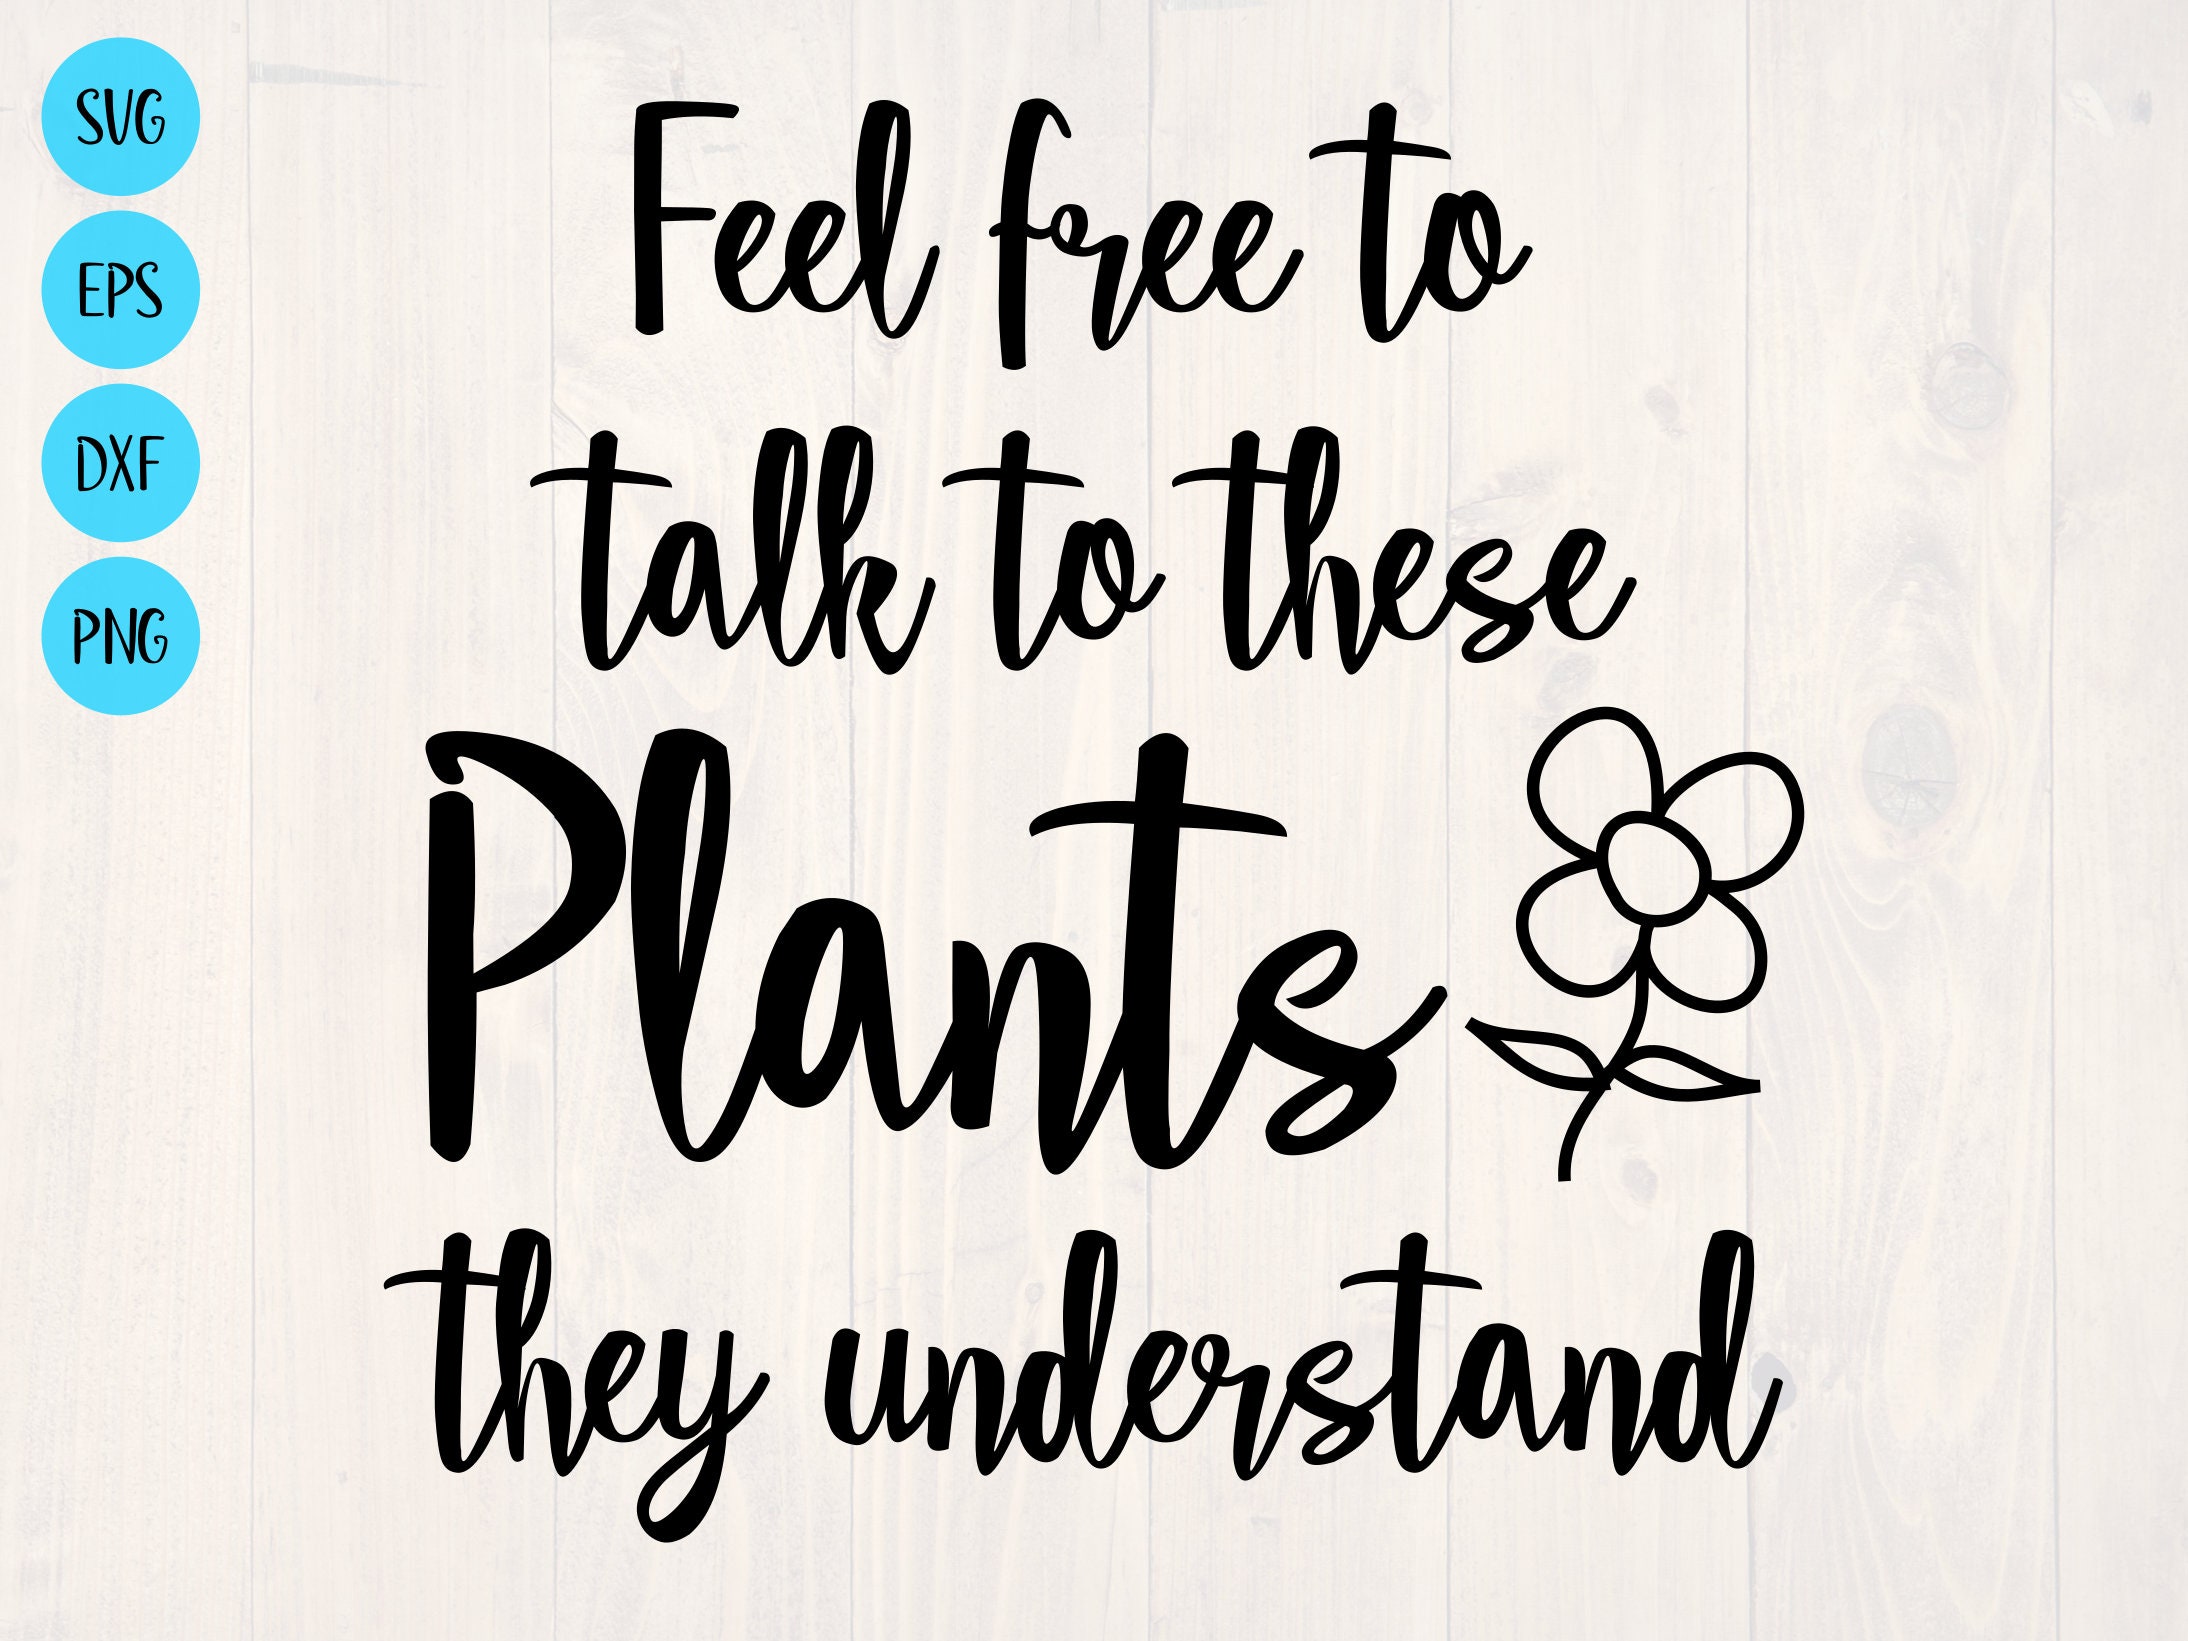 Plants, Free Full-Text